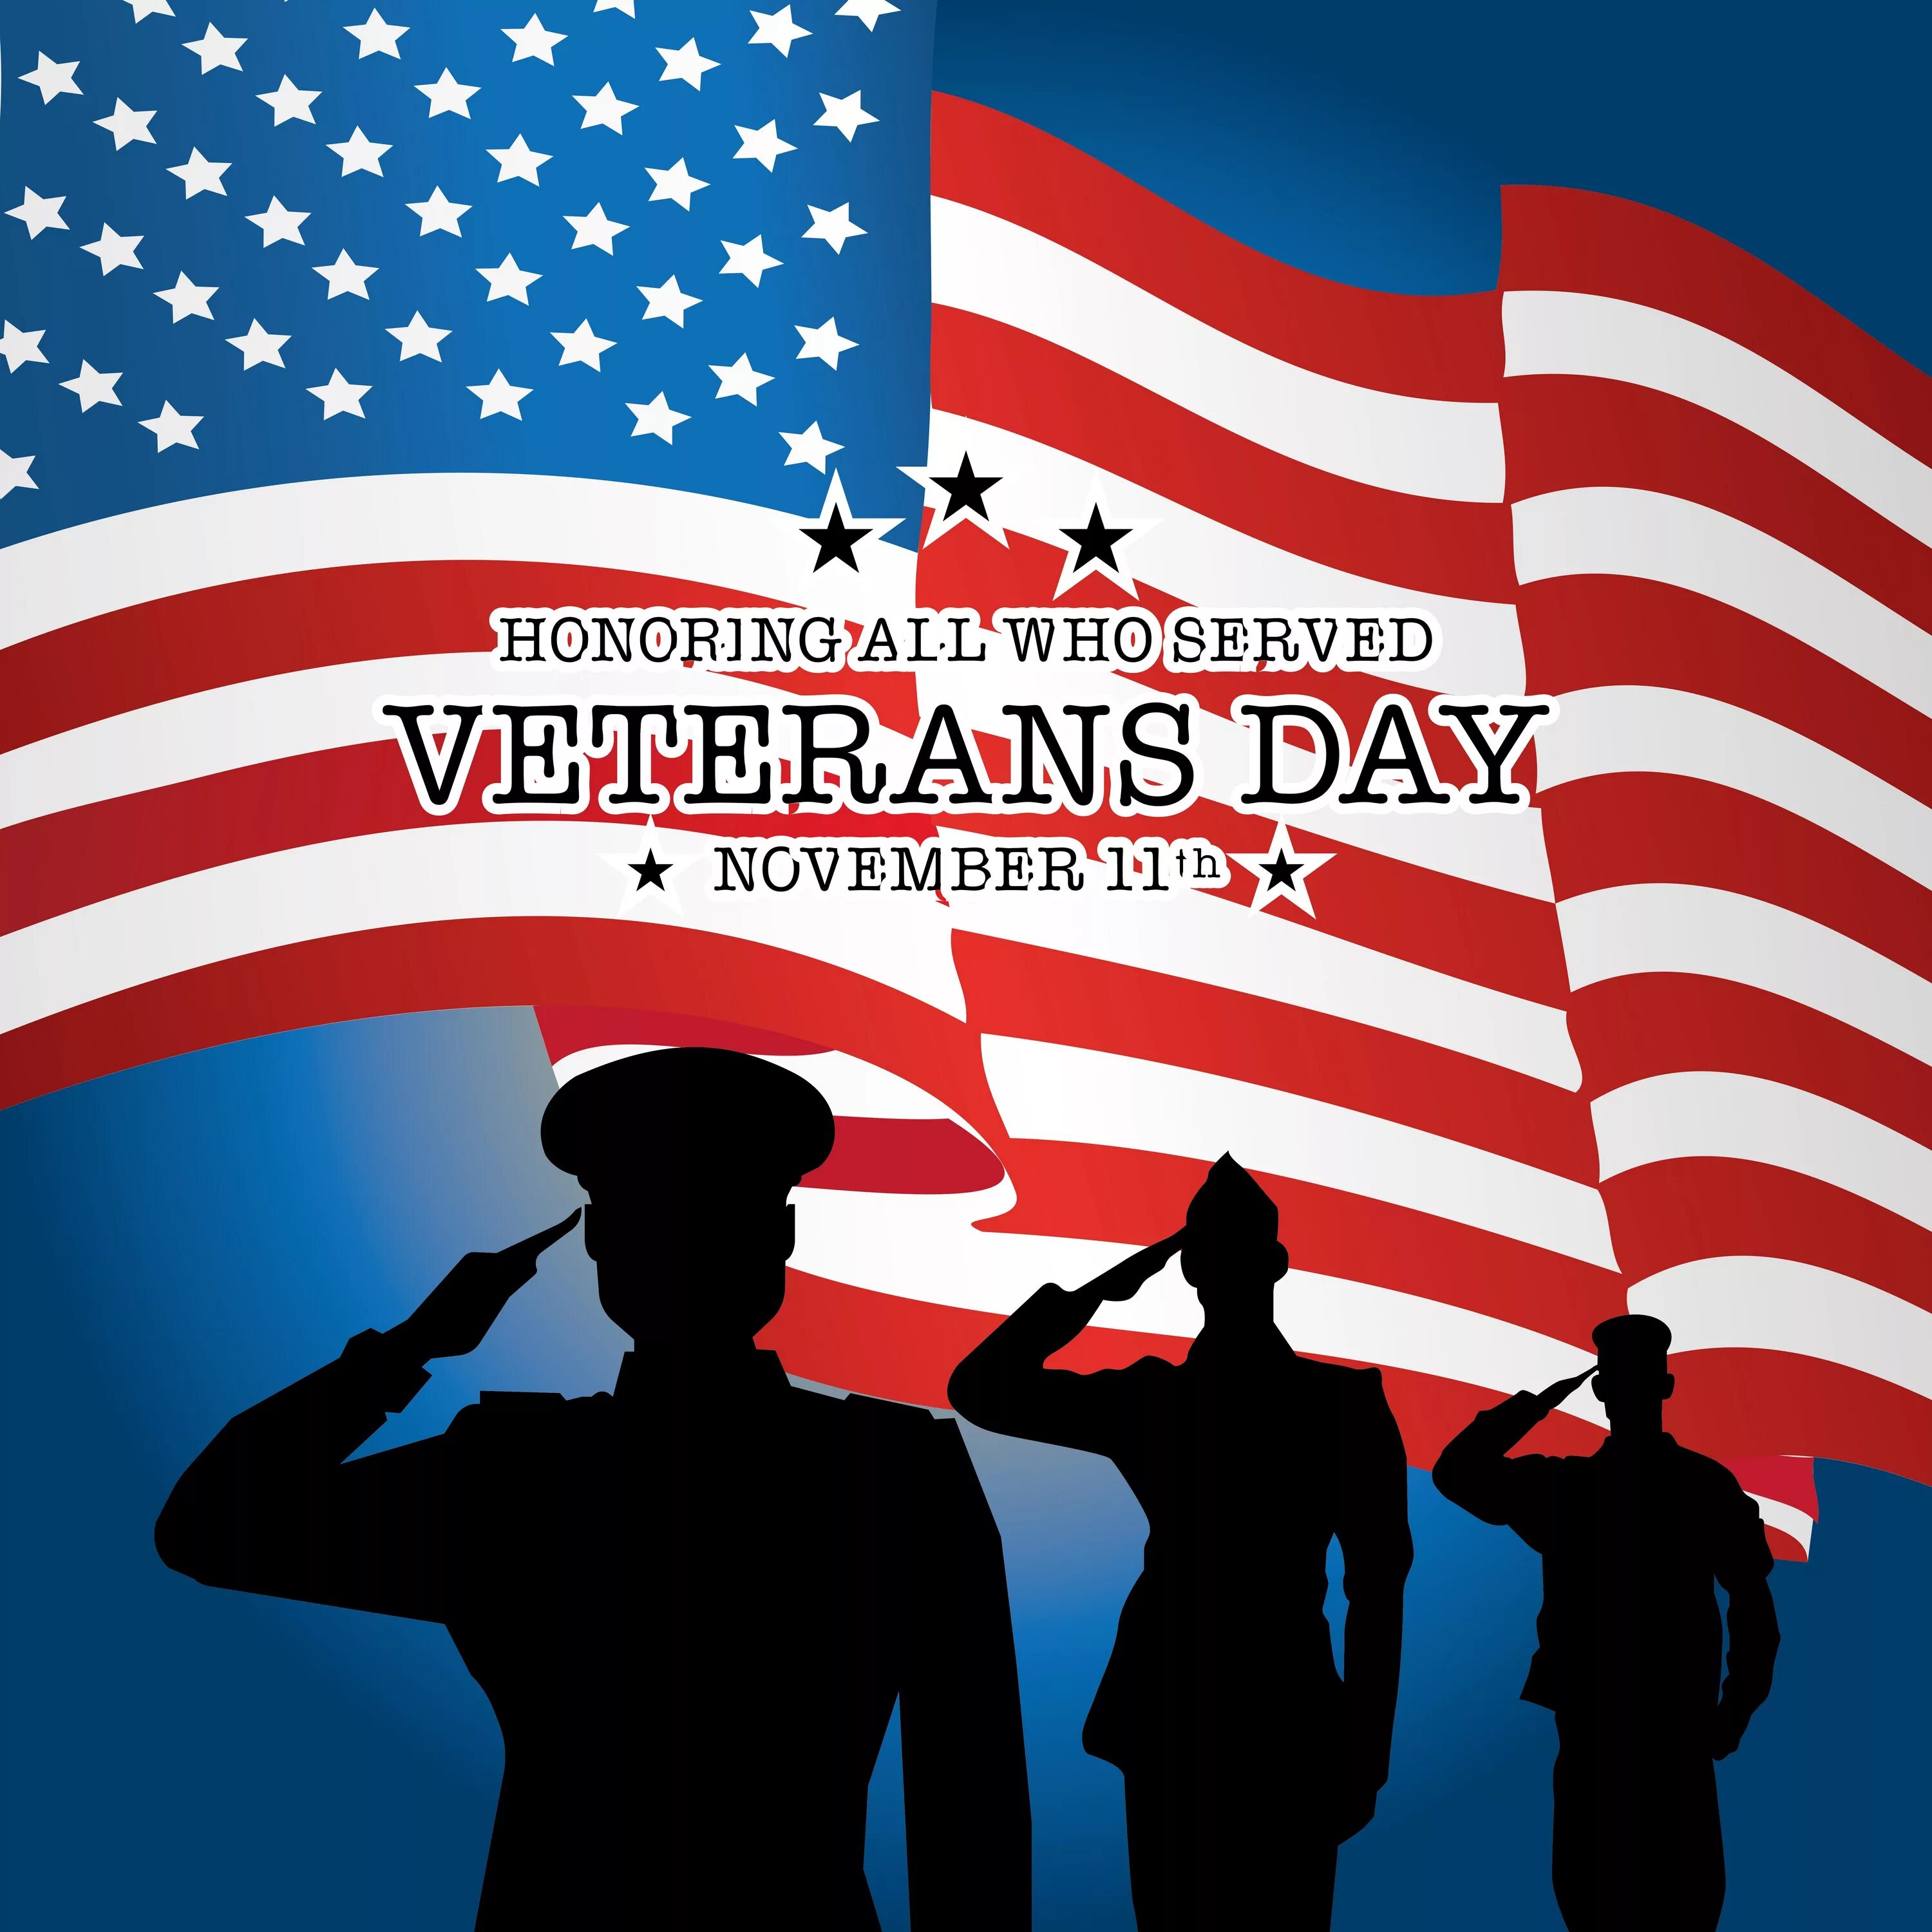 Veterans day. Veteran's Day. День ветеранов в США картинки. Veterans' Day (Netherlands). Honoring all who served thank you veterans.